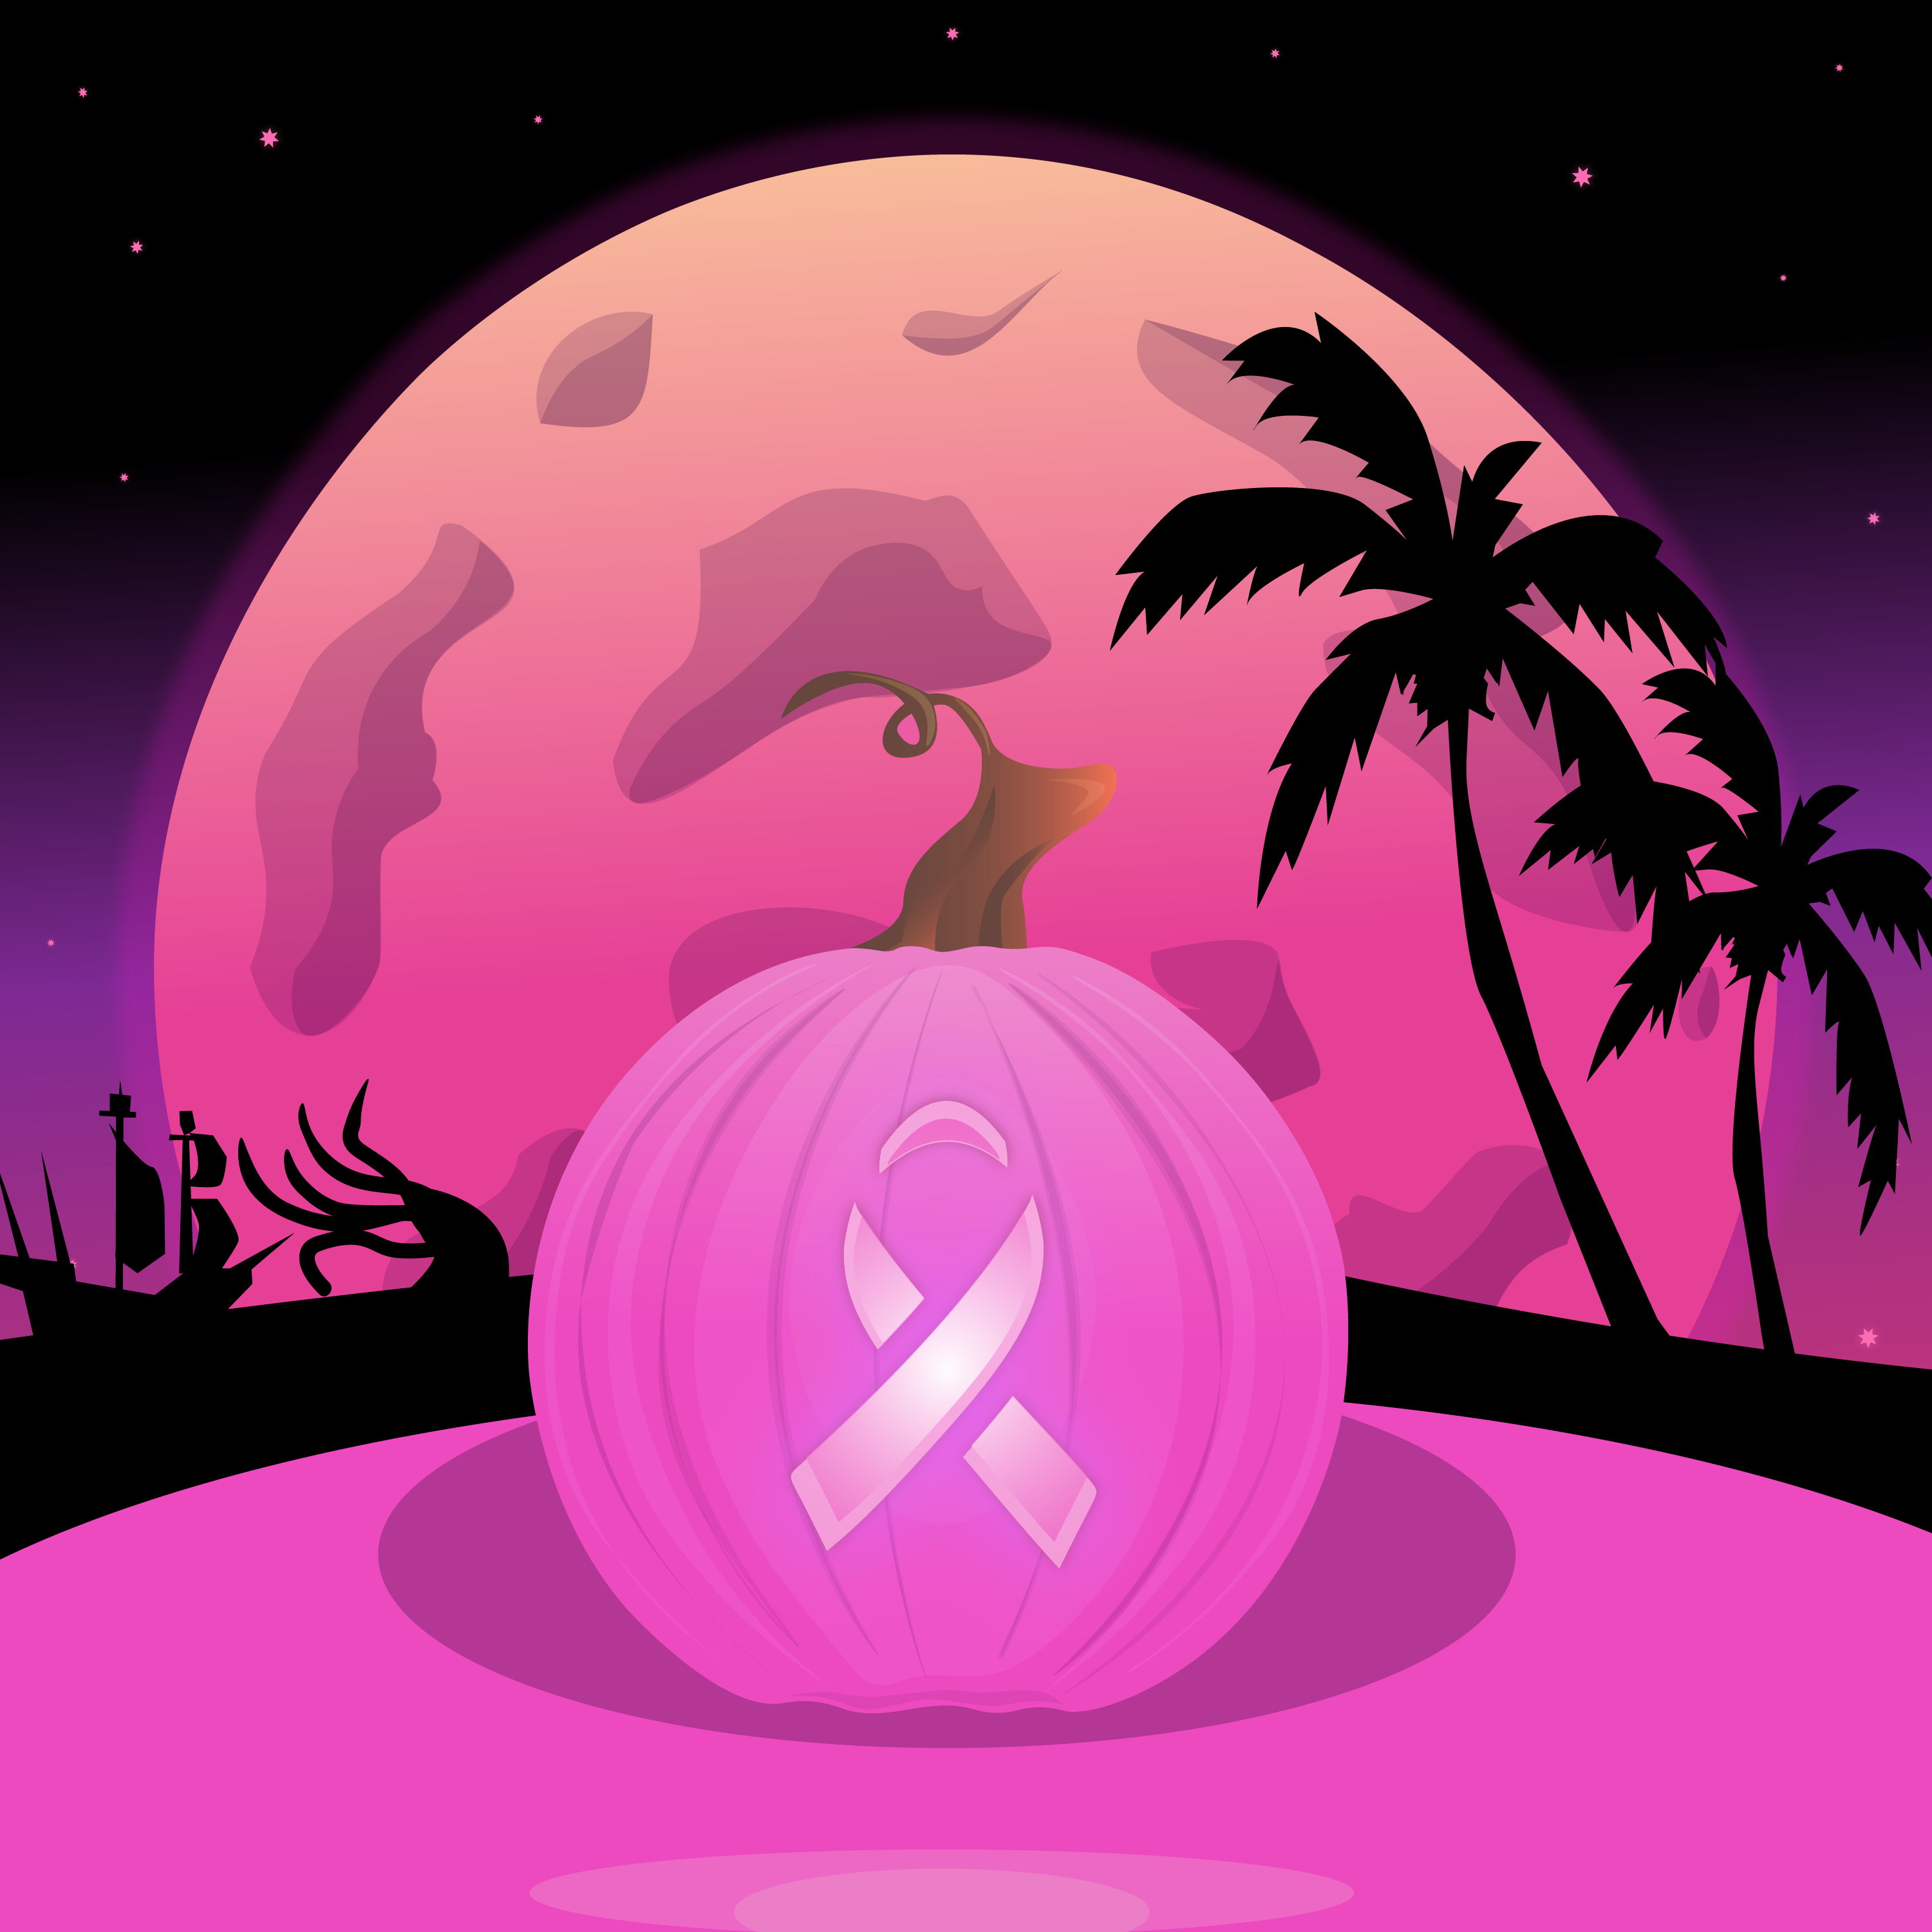 Breast Cancer Awareness Pumpkin Image